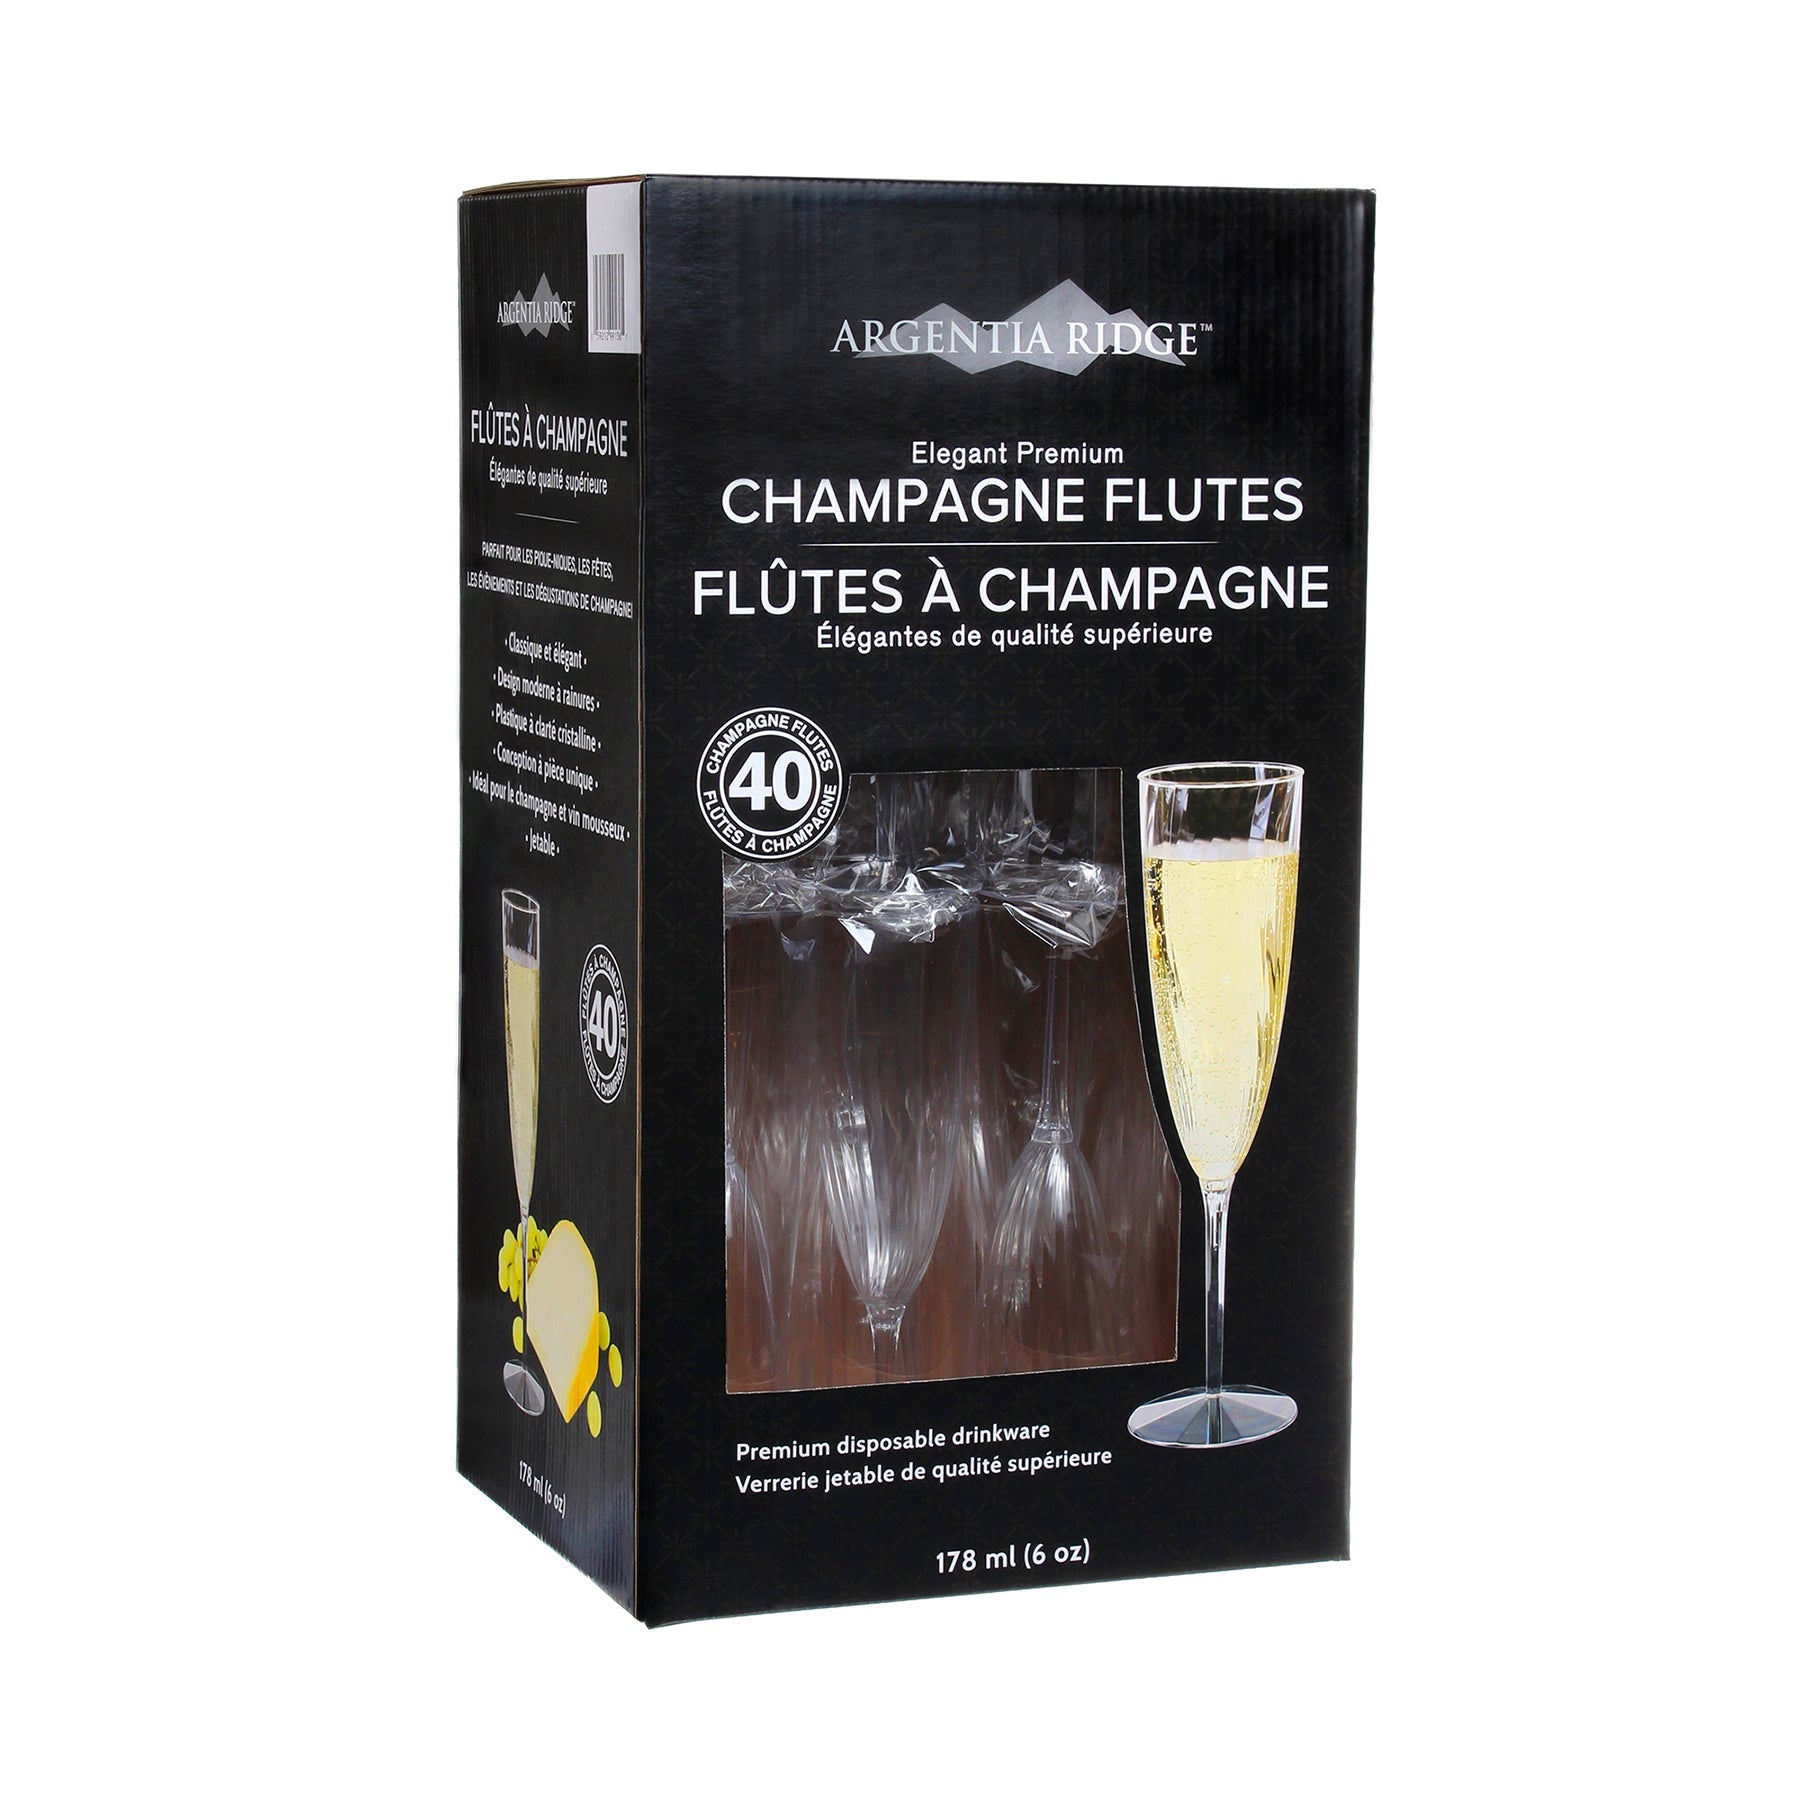 Argentia Ridge 40 Crystal Champagne Glasses Clear Plastic 16oz each